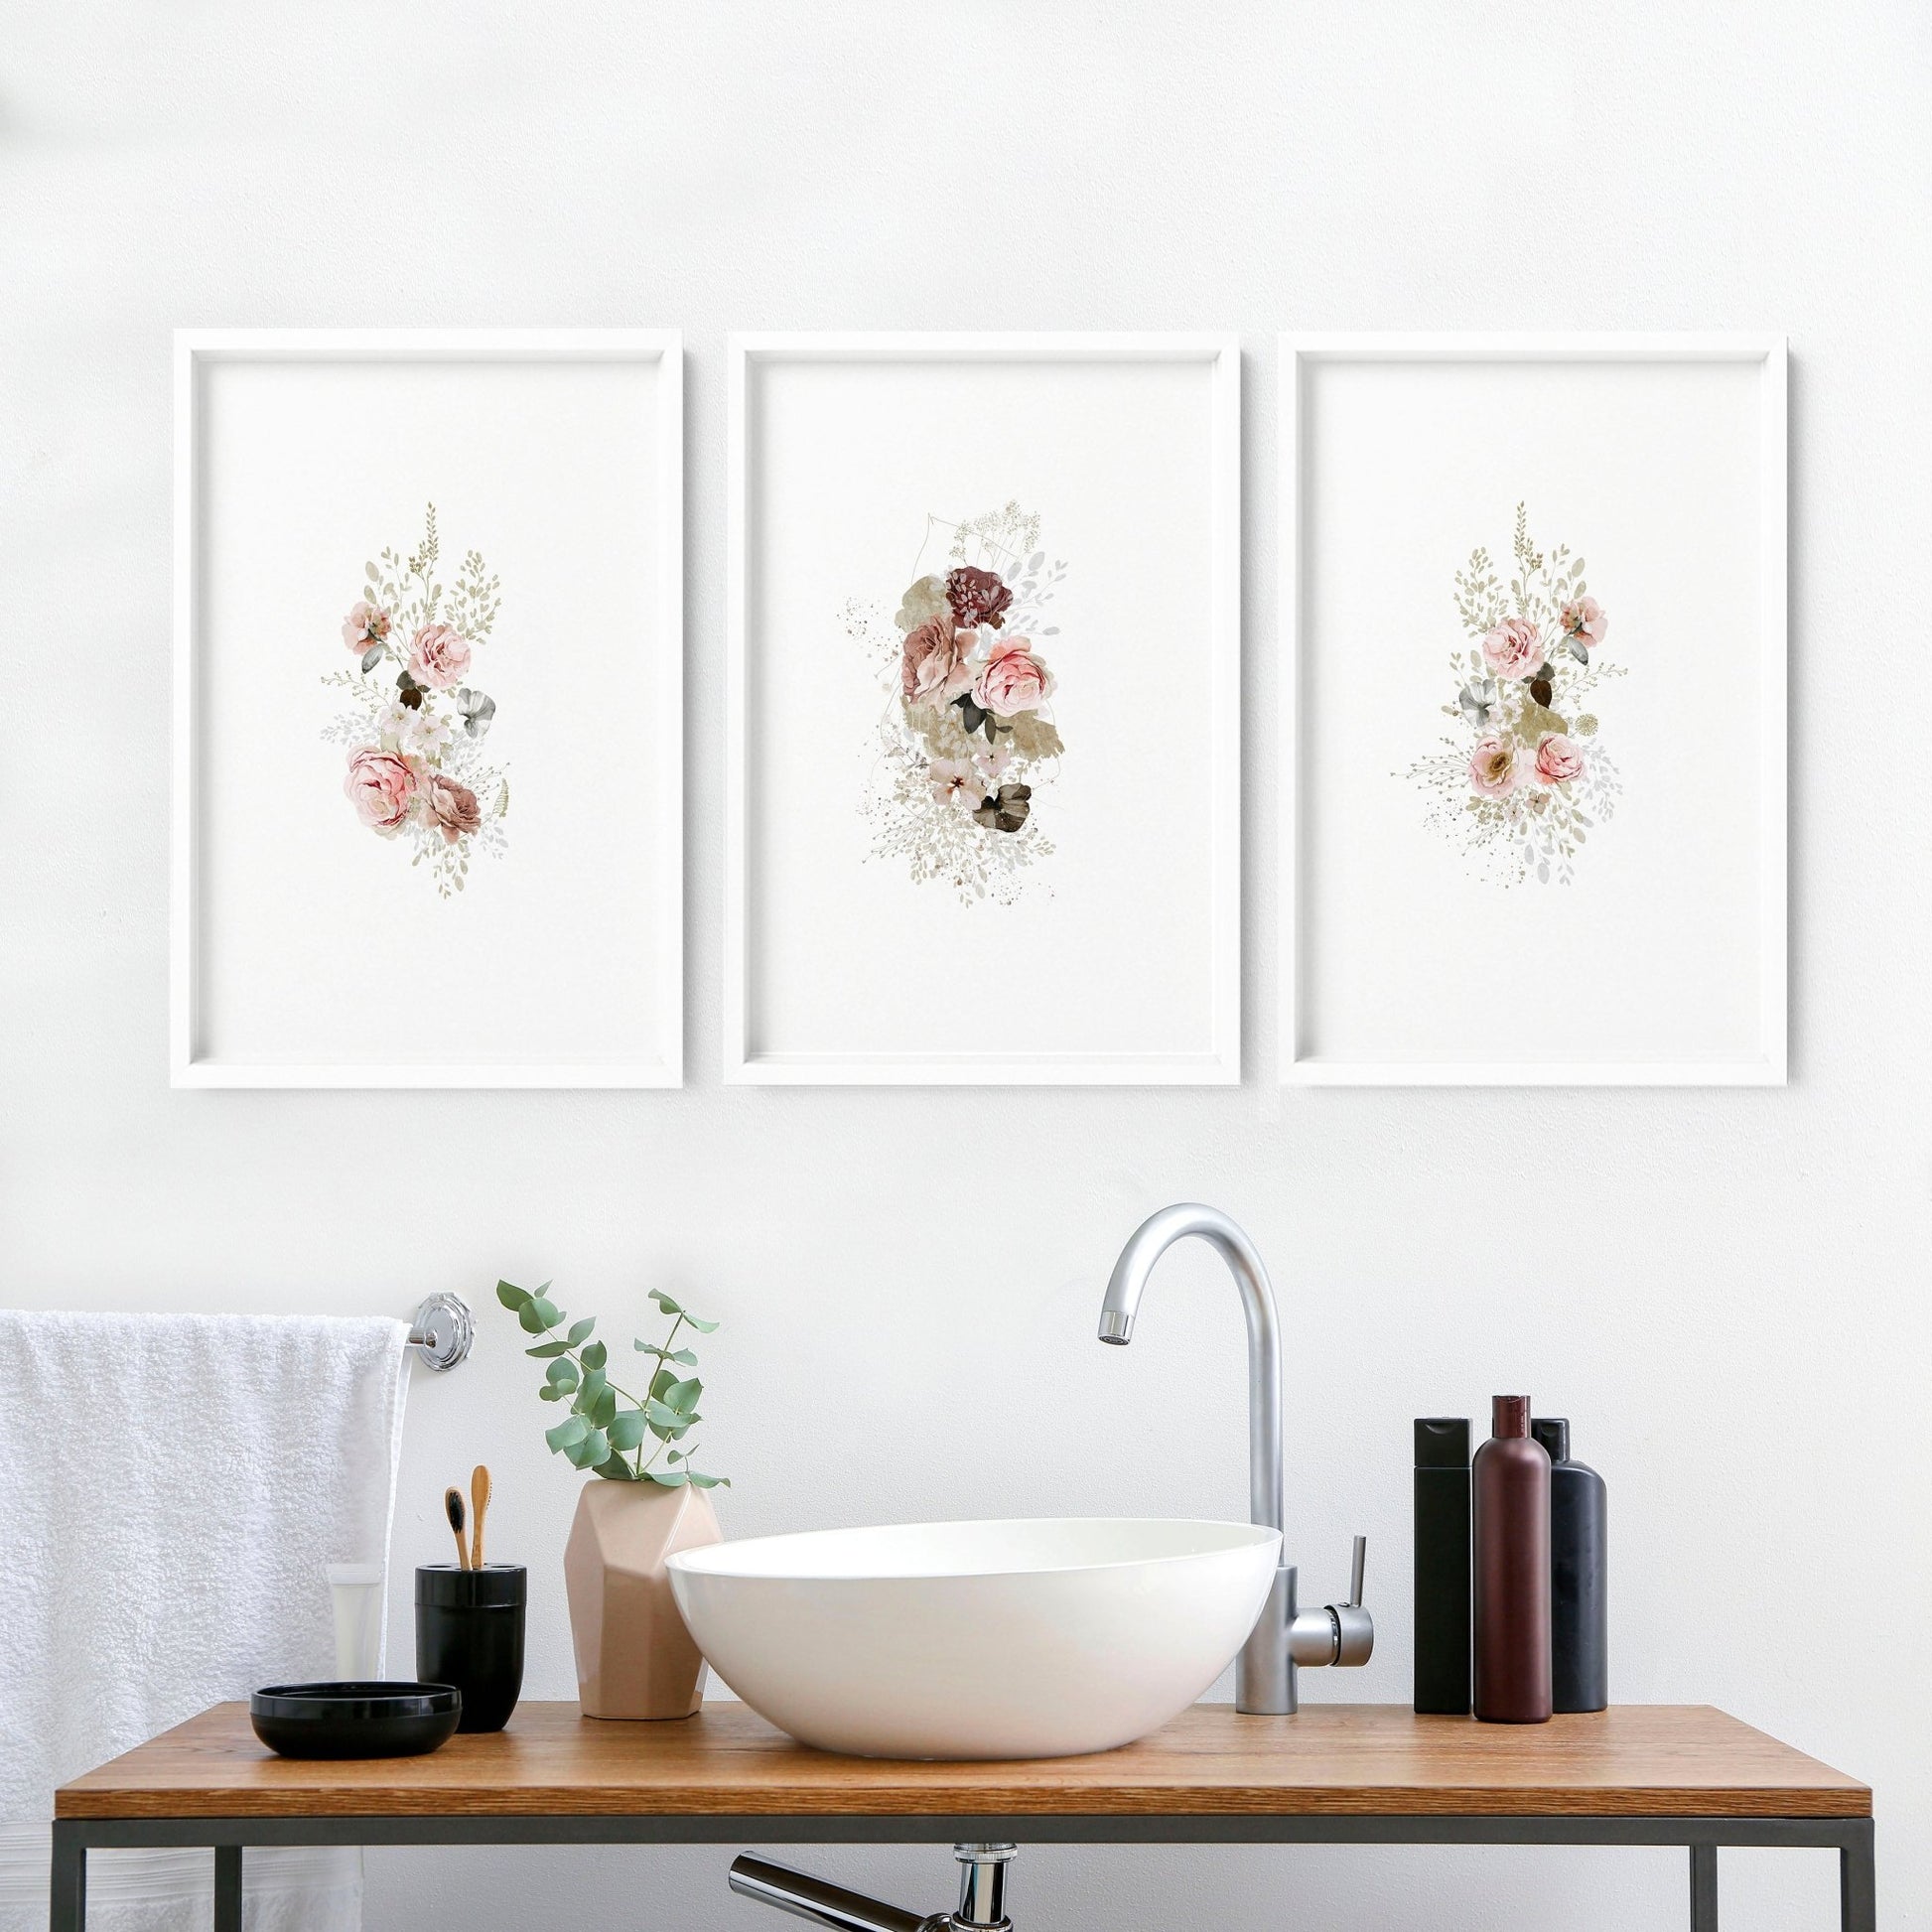 Restroom wall art | set of 3 Shabby Chic wall prints